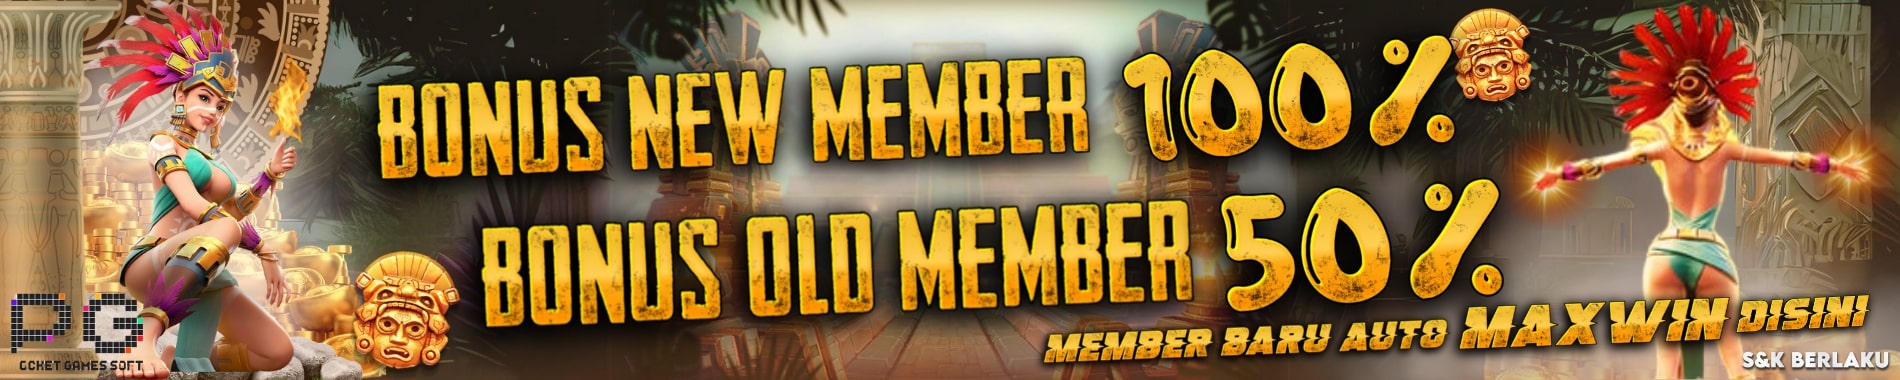 Bonus New/Old Member